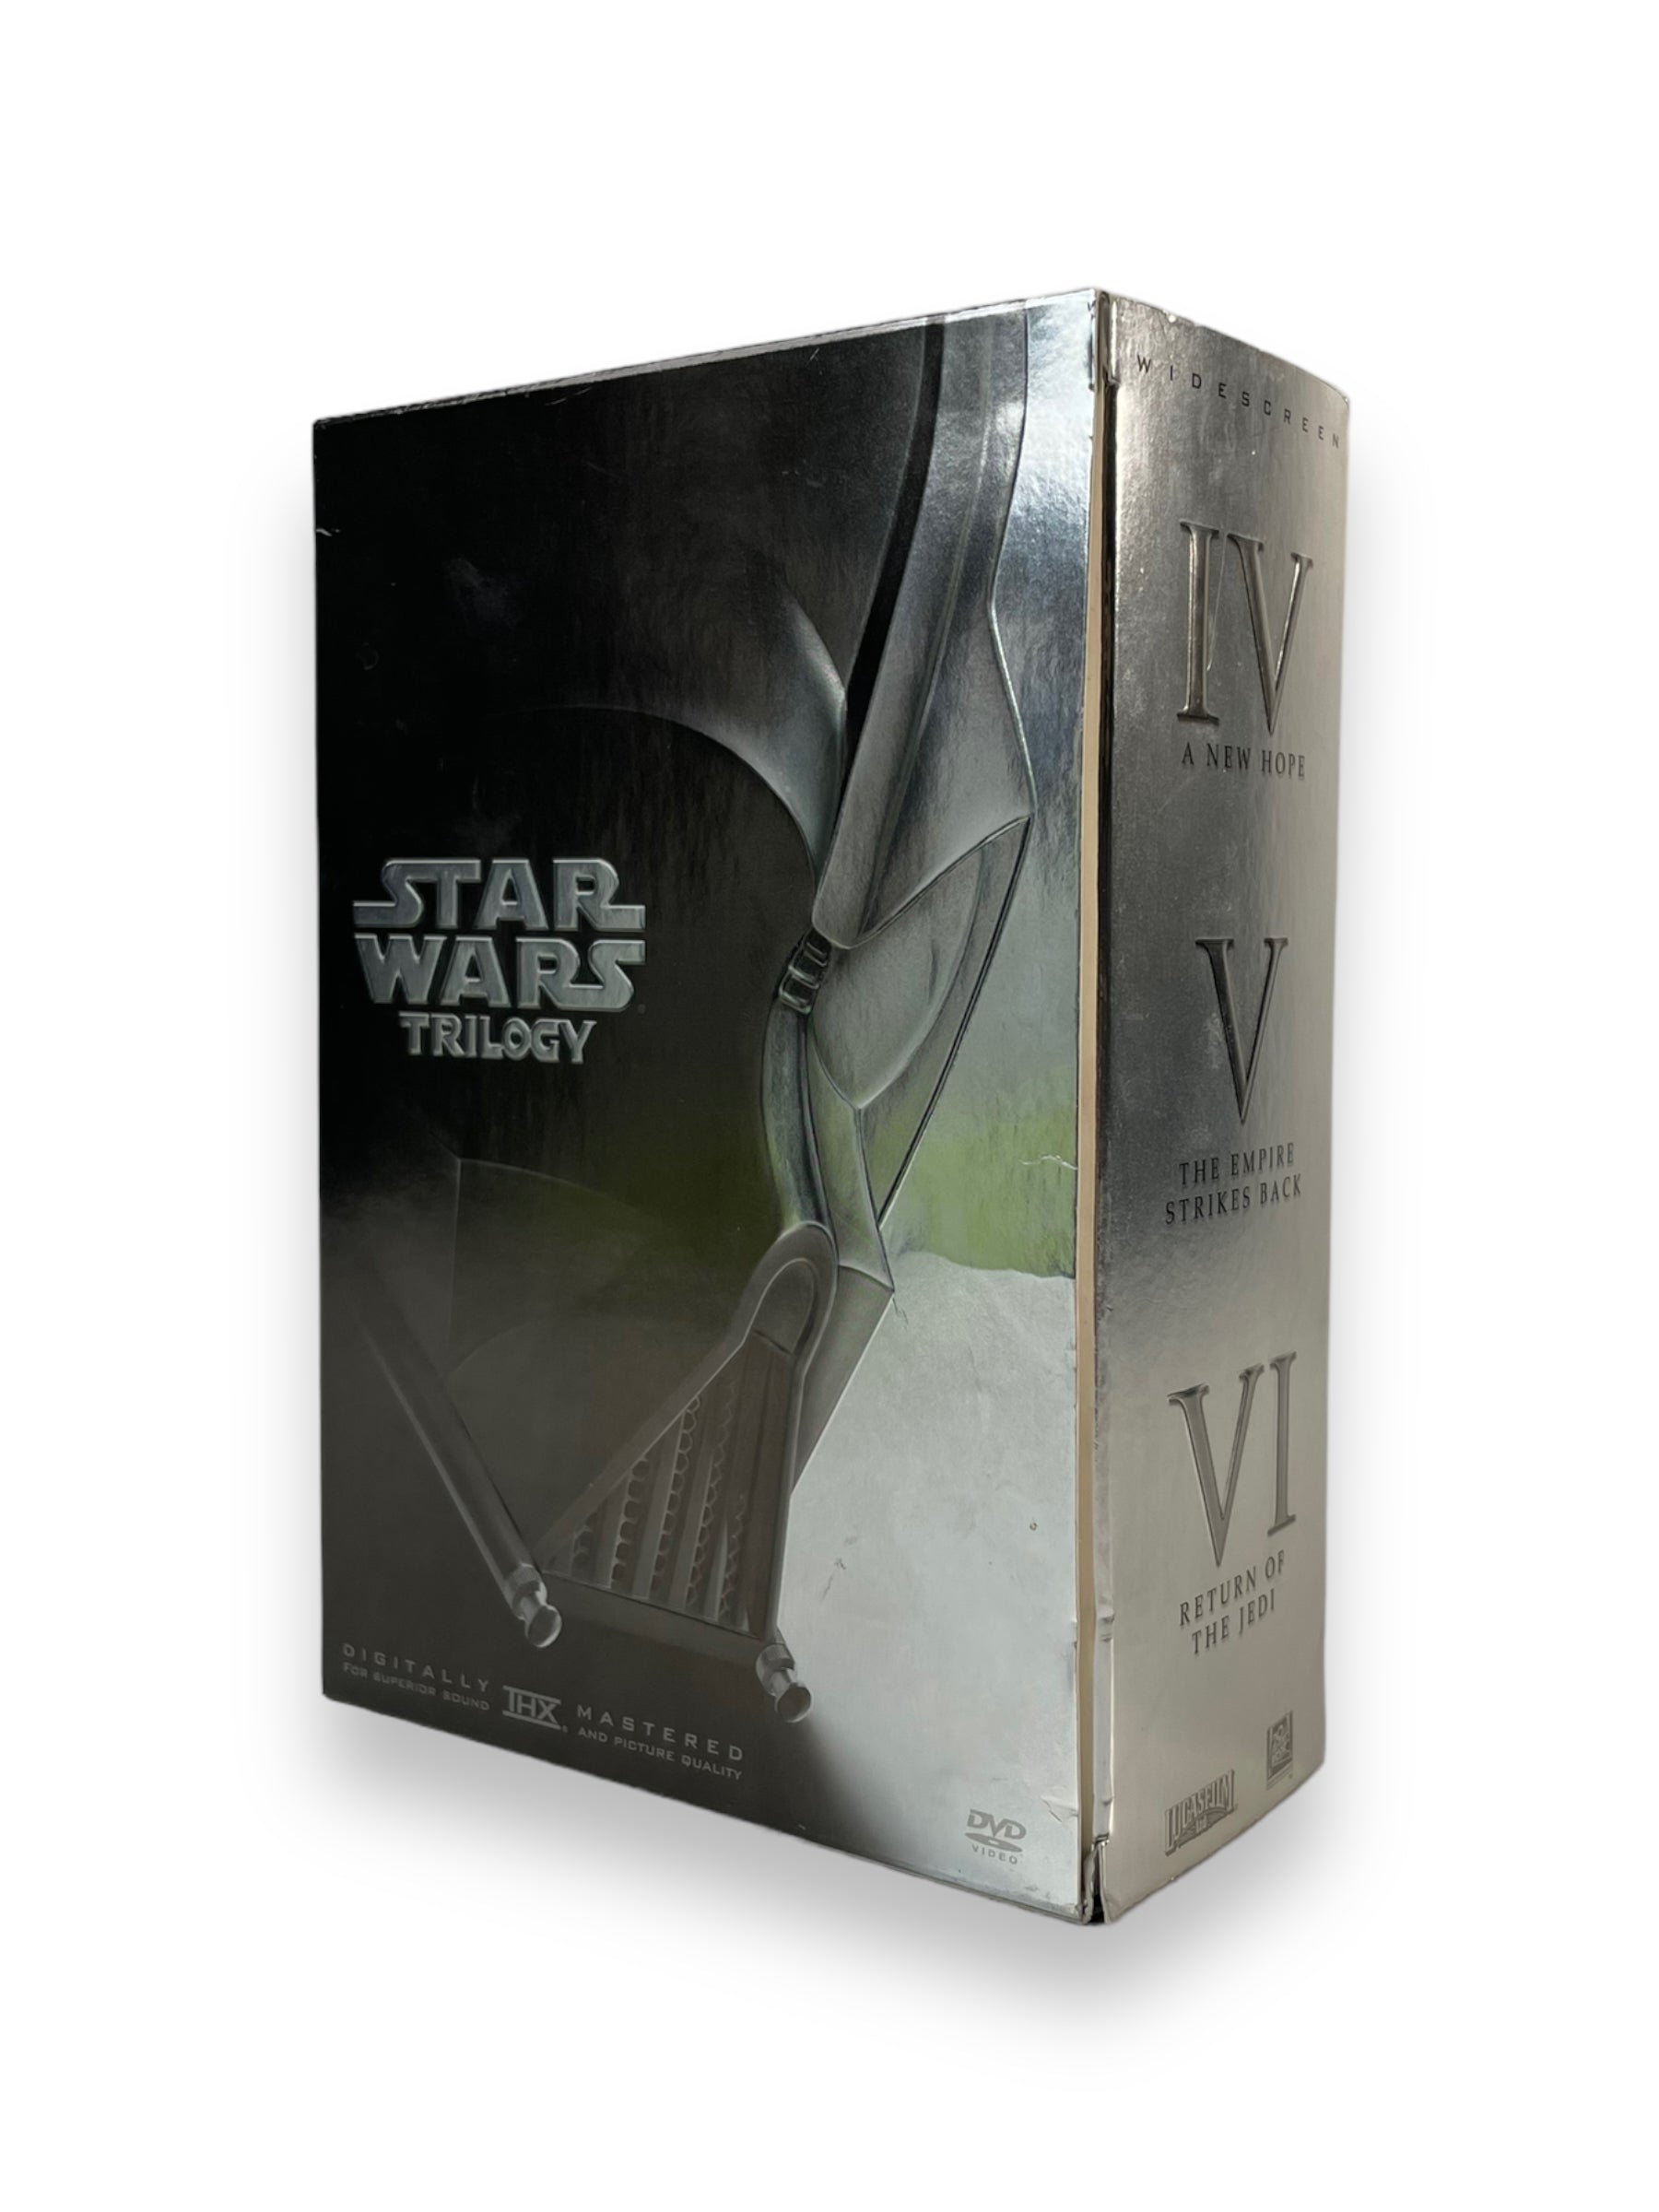 Star Wars Trilogy DVD 2004 Widescreen 4-Disc Box Set Edition